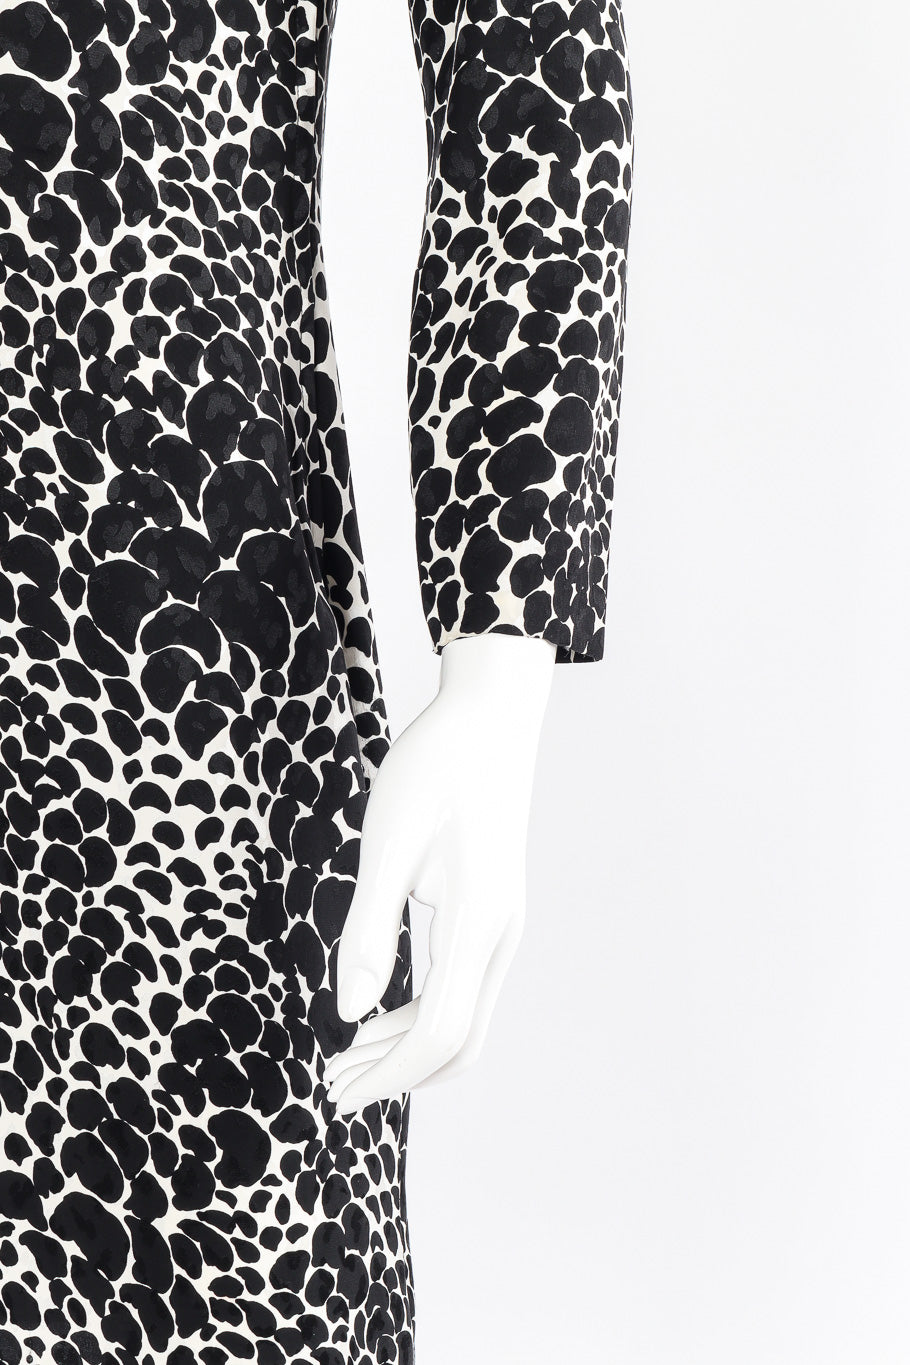 Vintage Saint Laurent Petal Print Silk Dress view of sleeve on mannequin closeup @Recessla